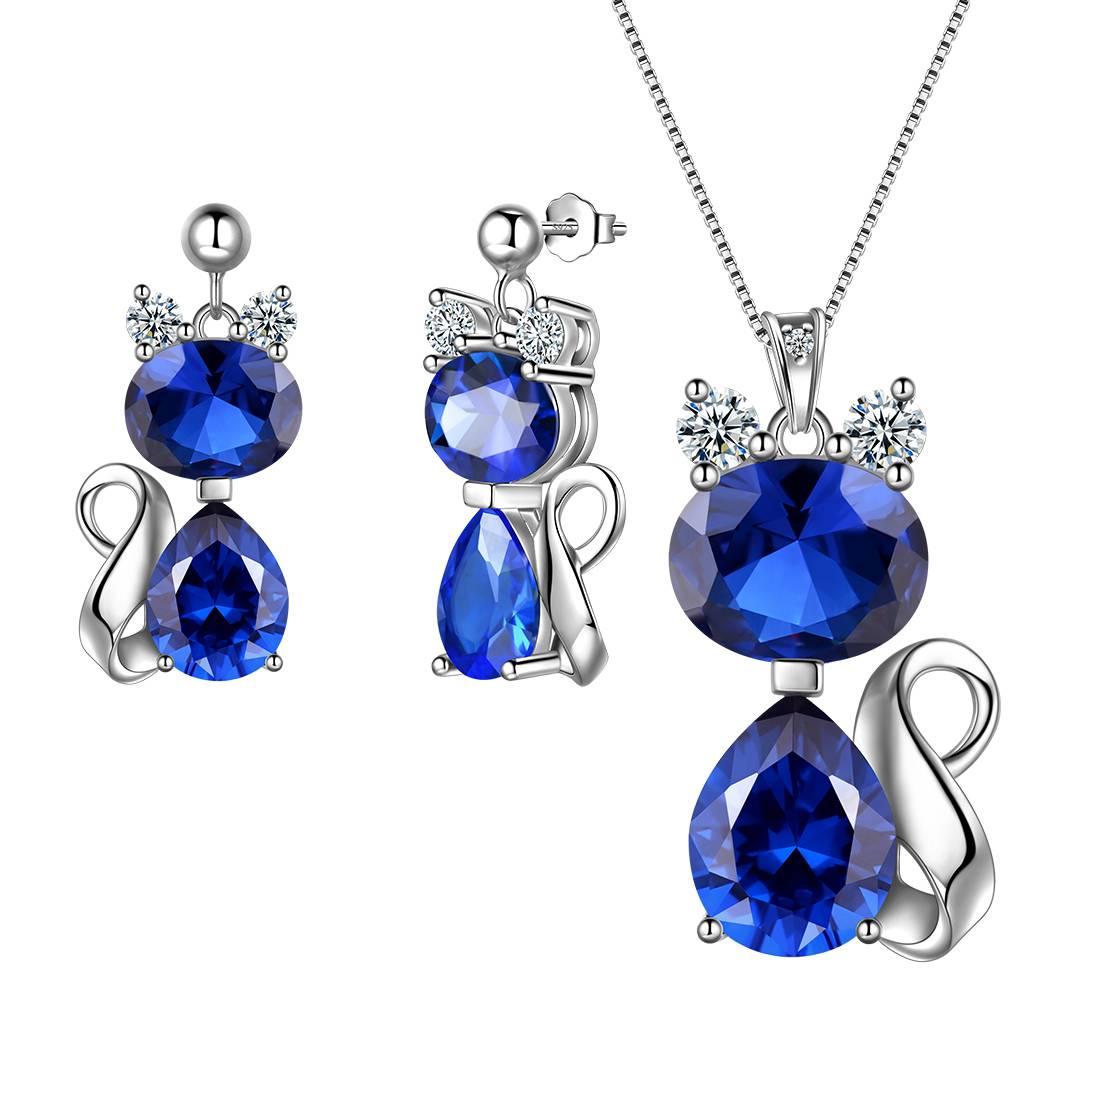 Cats Necklace Earrings Jewelry Blue September Birthstone - Jewelry Set - Aurora Tears Jewelry